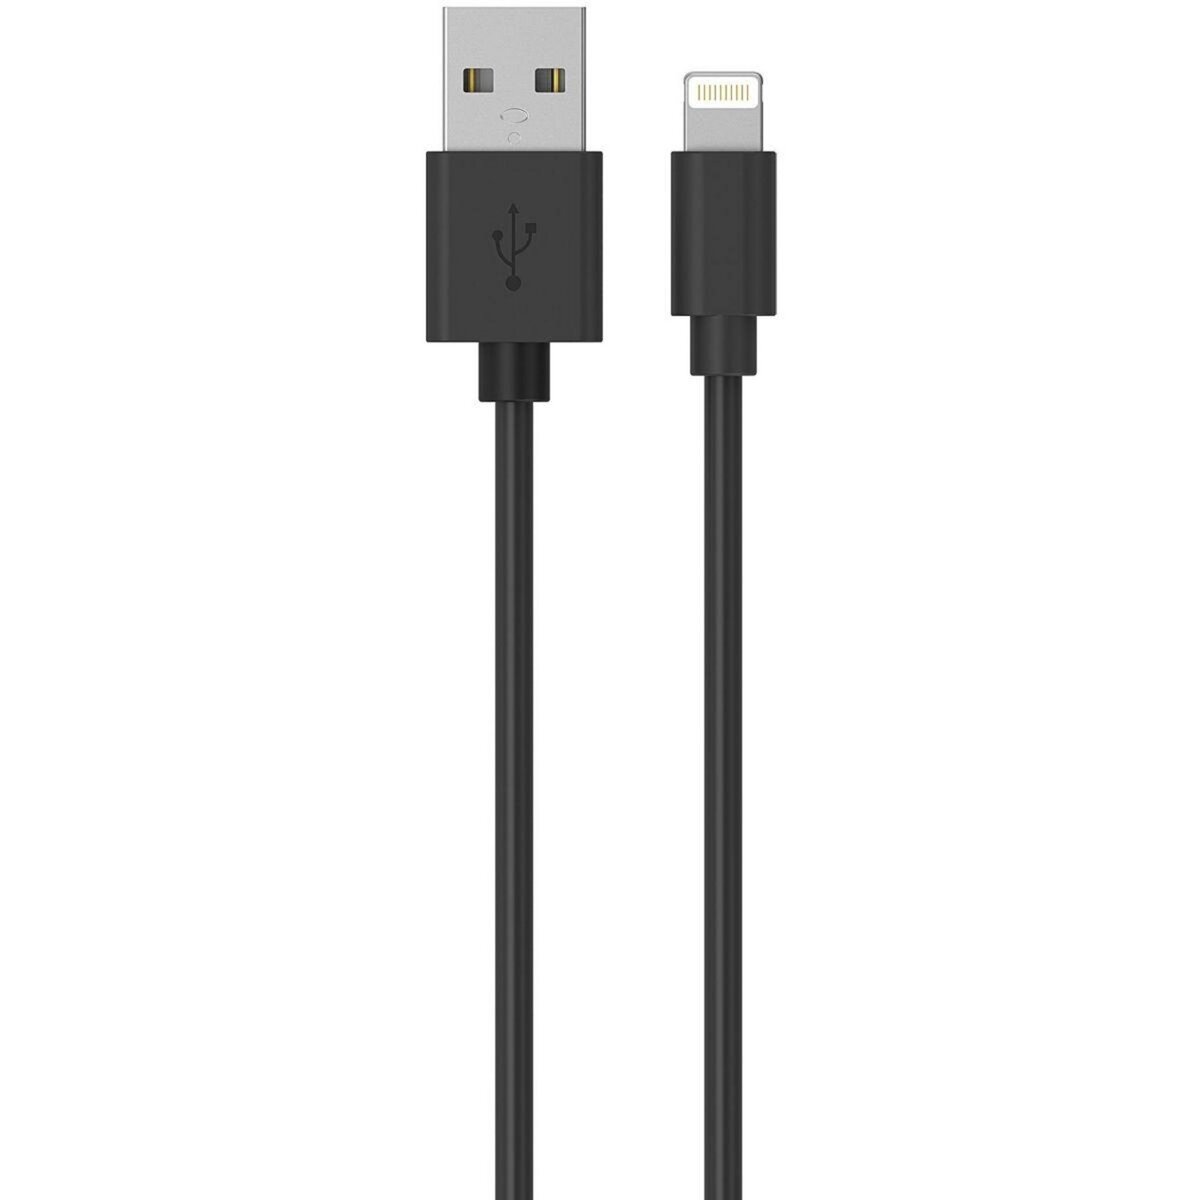 Câble Lightning ESSENTIELB vers USB 2m blanc certifié Apple